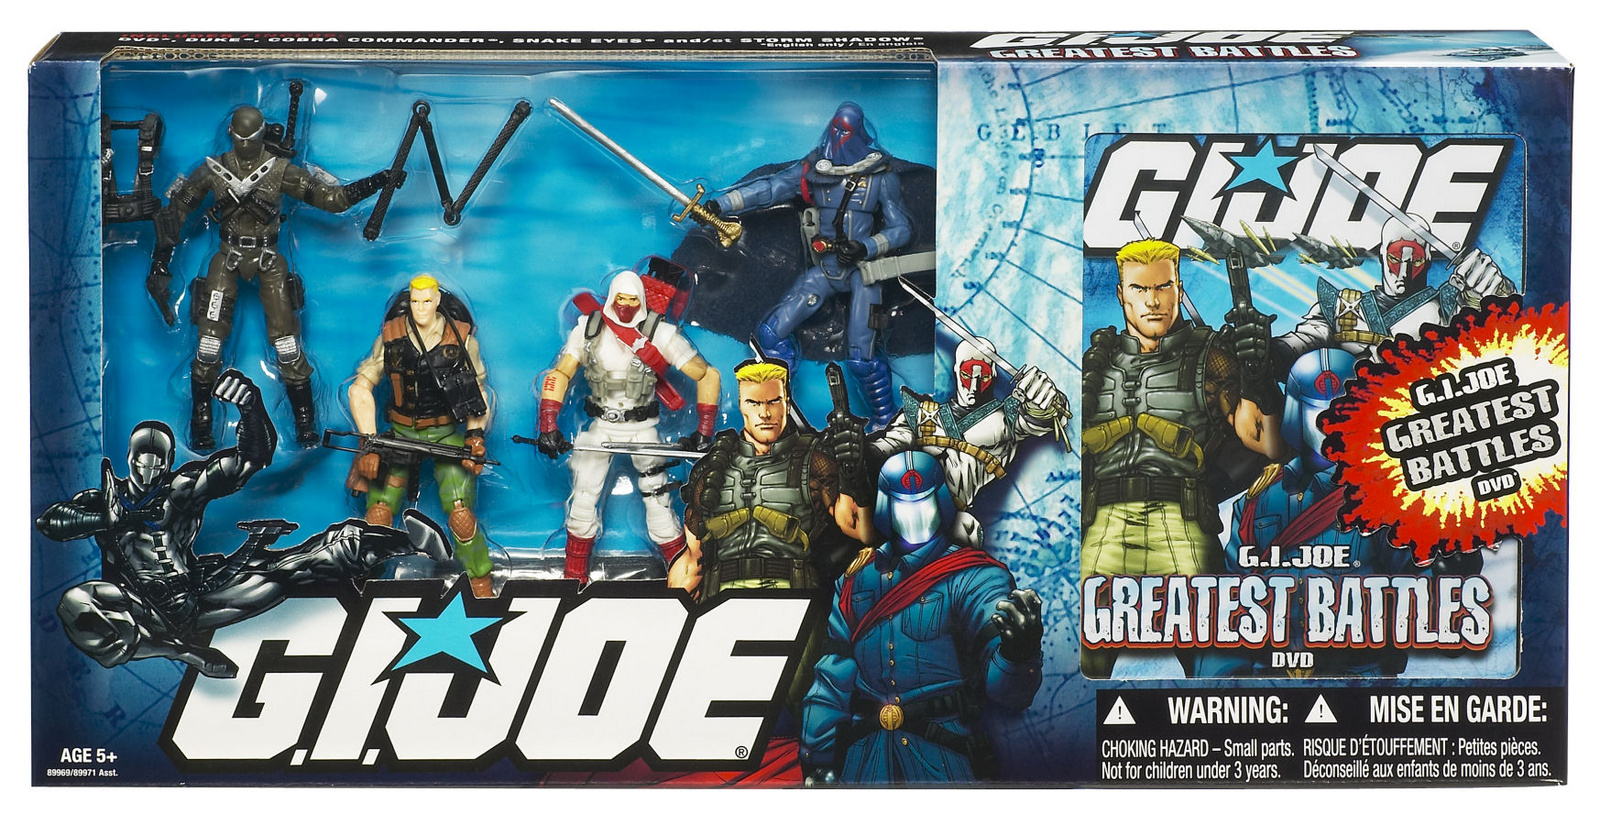 Cobra Commander (Greatest Battles) - G.I. Joe Toy Database and